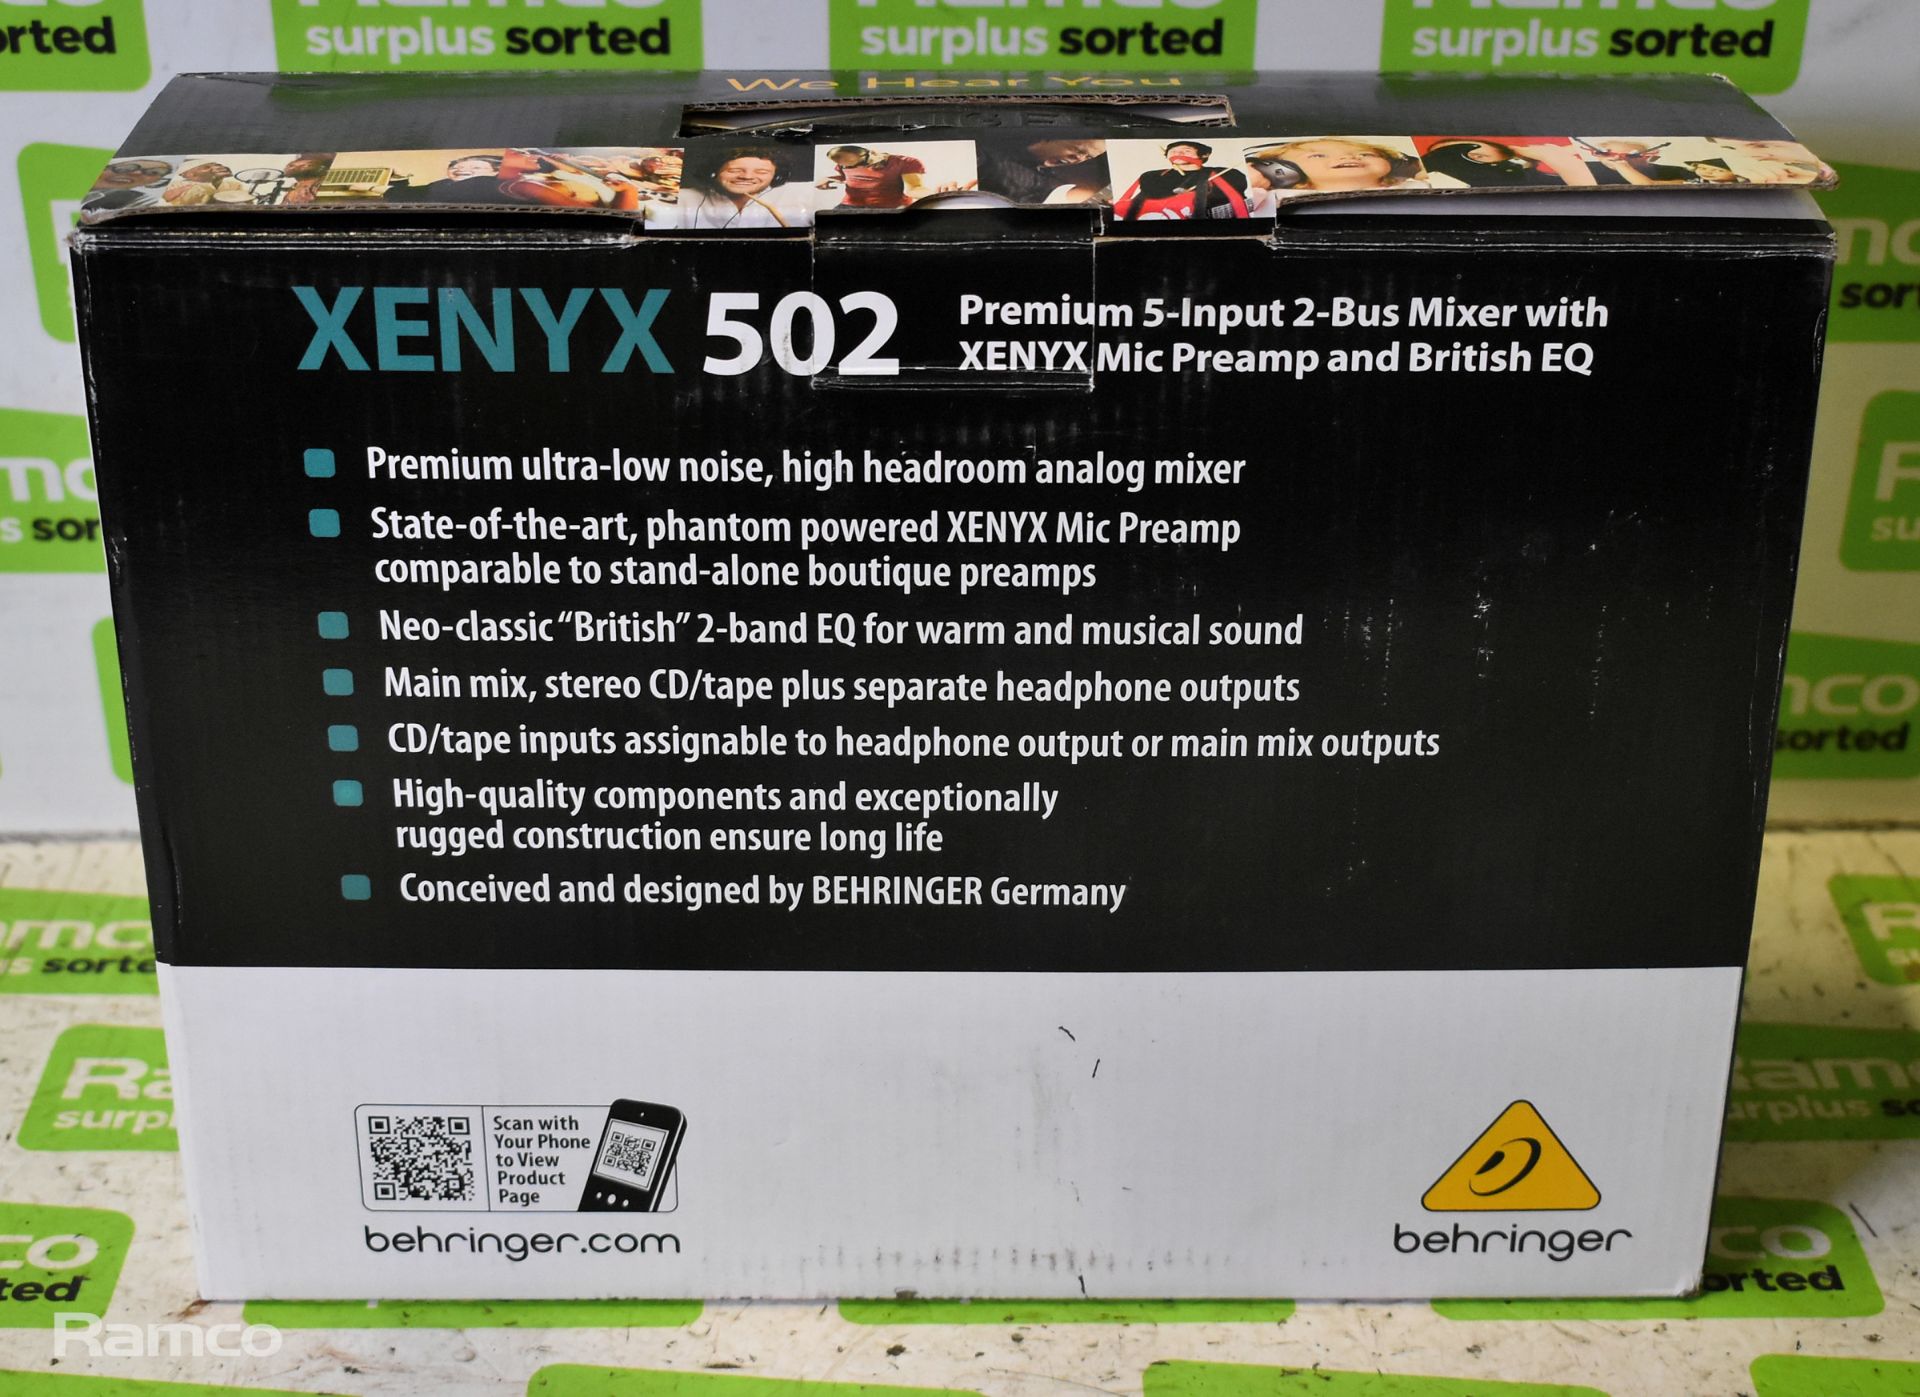 Behringer Xenyx 502 - Premium 5-Input 2-Bus mixer - Image 7 of 8